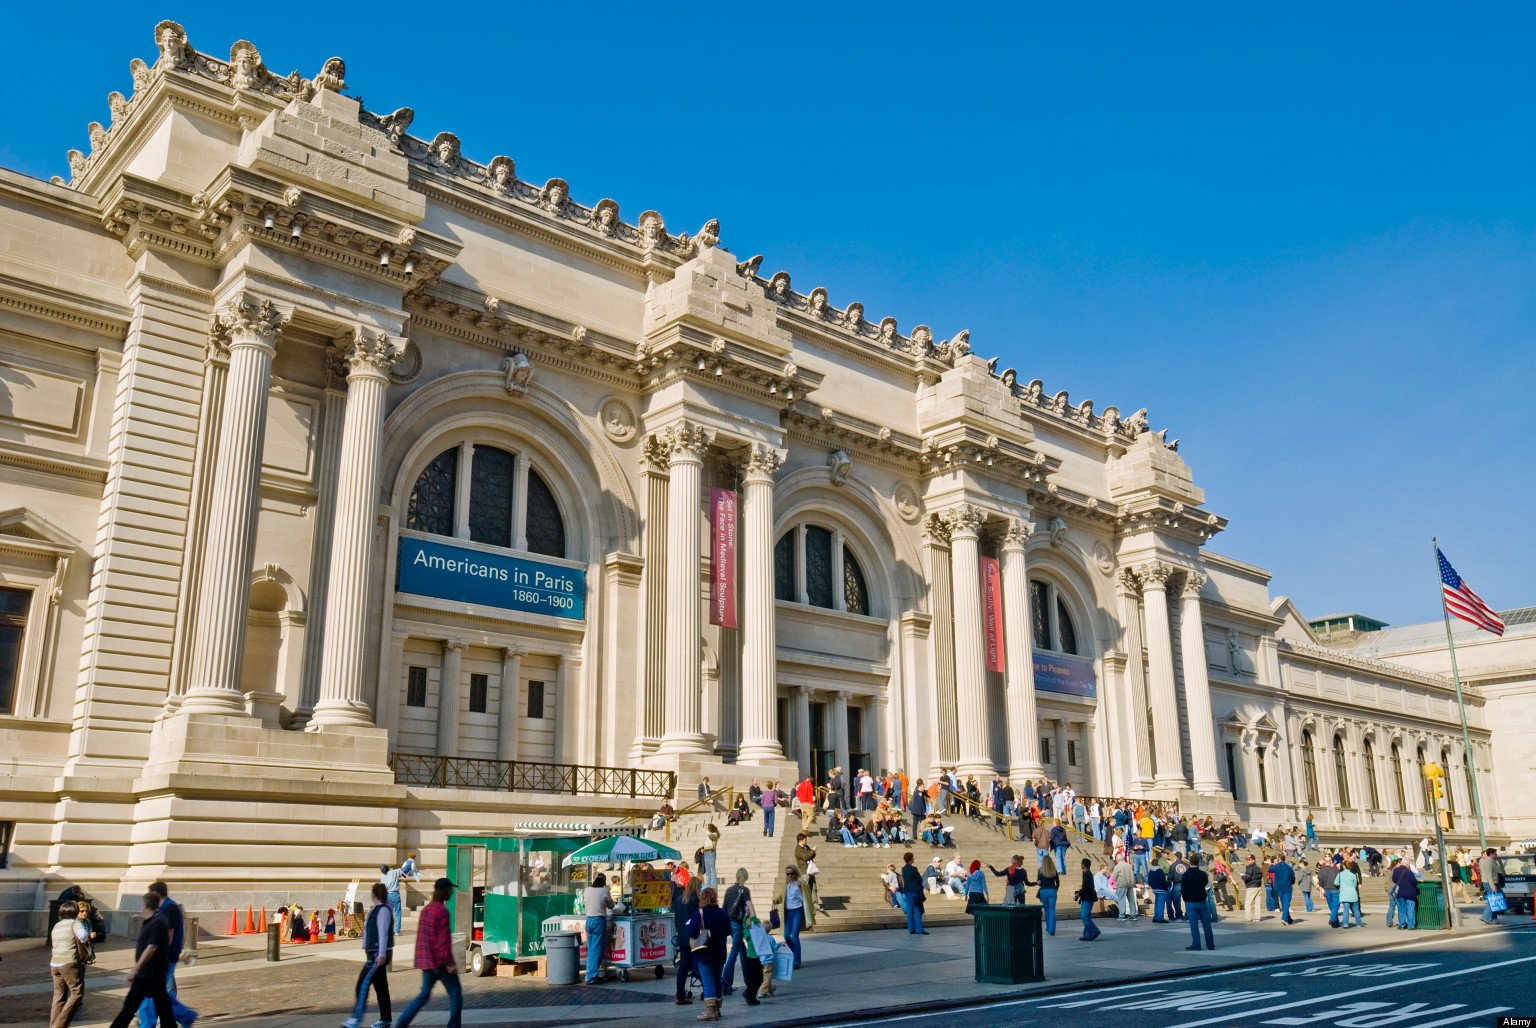 New York’s Metropolitan Museum of Art Celebrates the Lunar New Year